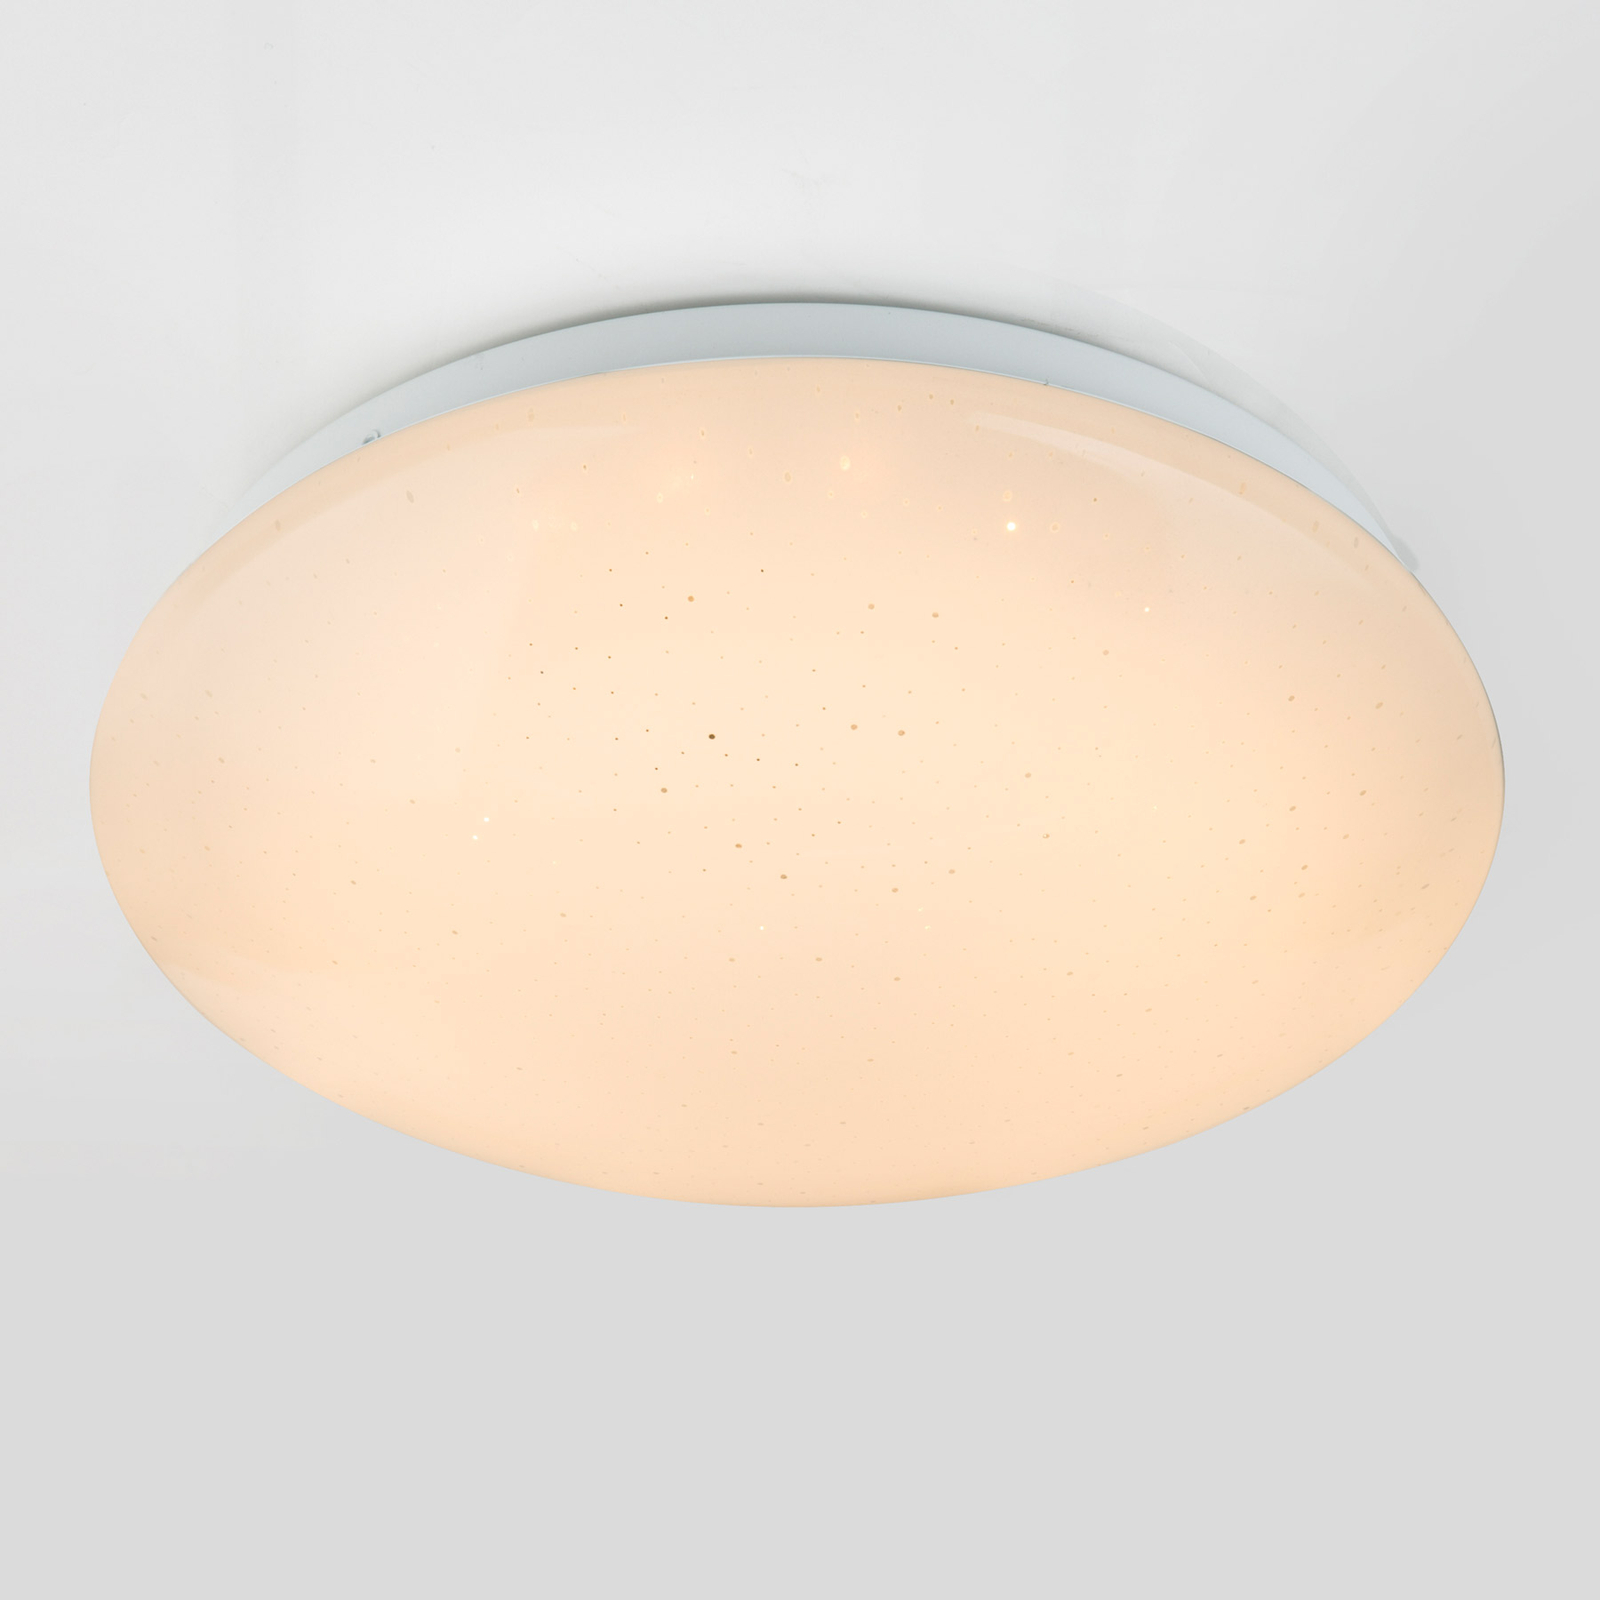 Plafonnier LED Atreju I, RGBW, dimmable, Ø 29 cm